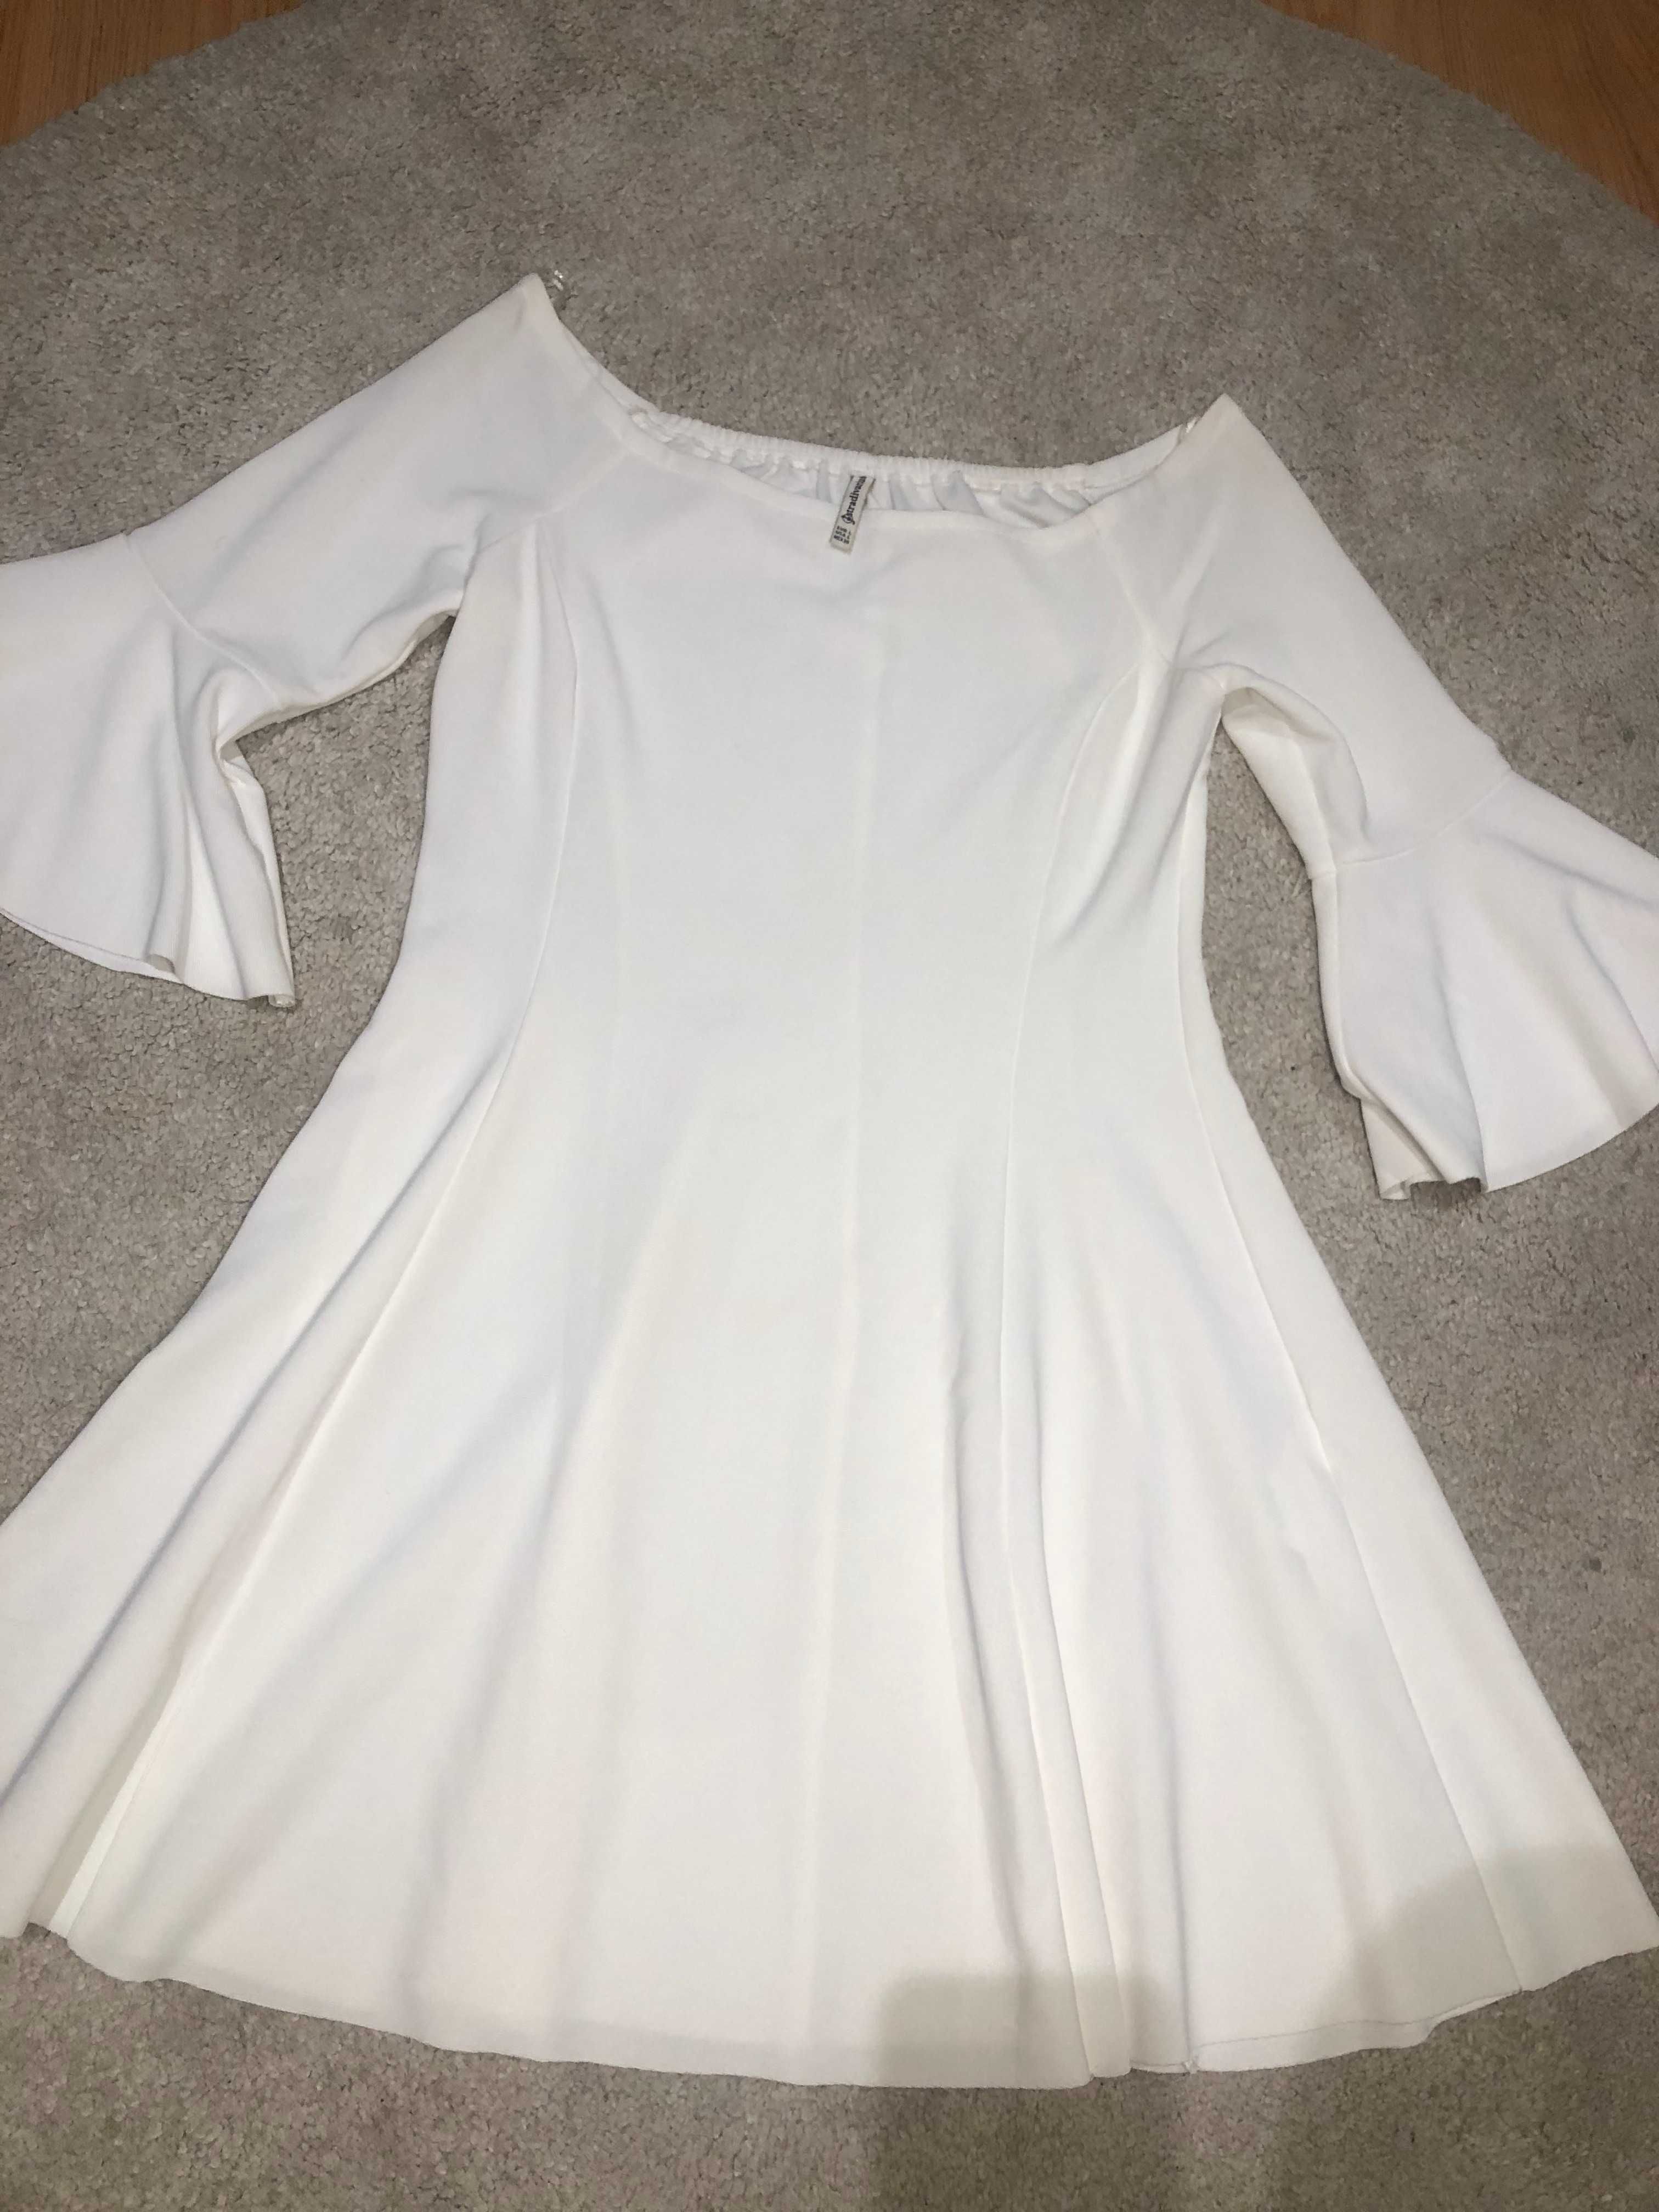 Vestido branco Stradiavarius - Novo